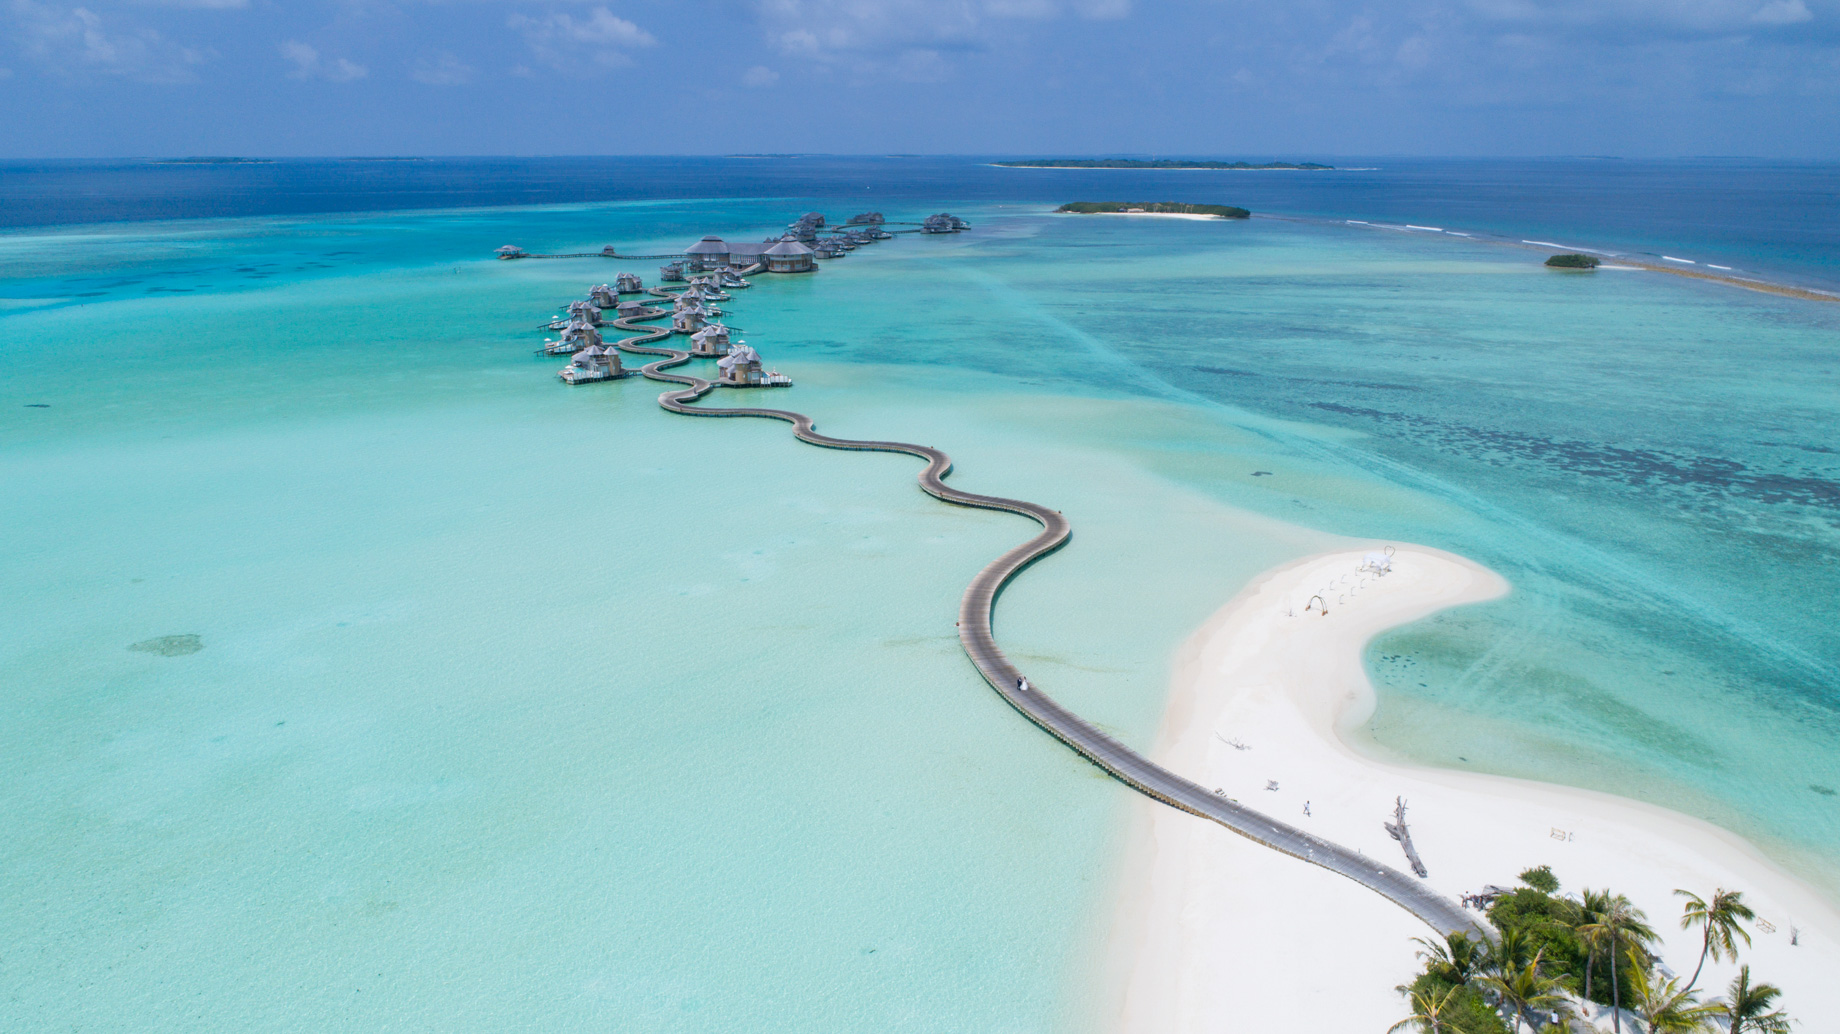 Soneva Jani Resort - Noonu Atoll, Medhufaru, Maldives - Overwater Villa Jetty Boardwalk Aerial